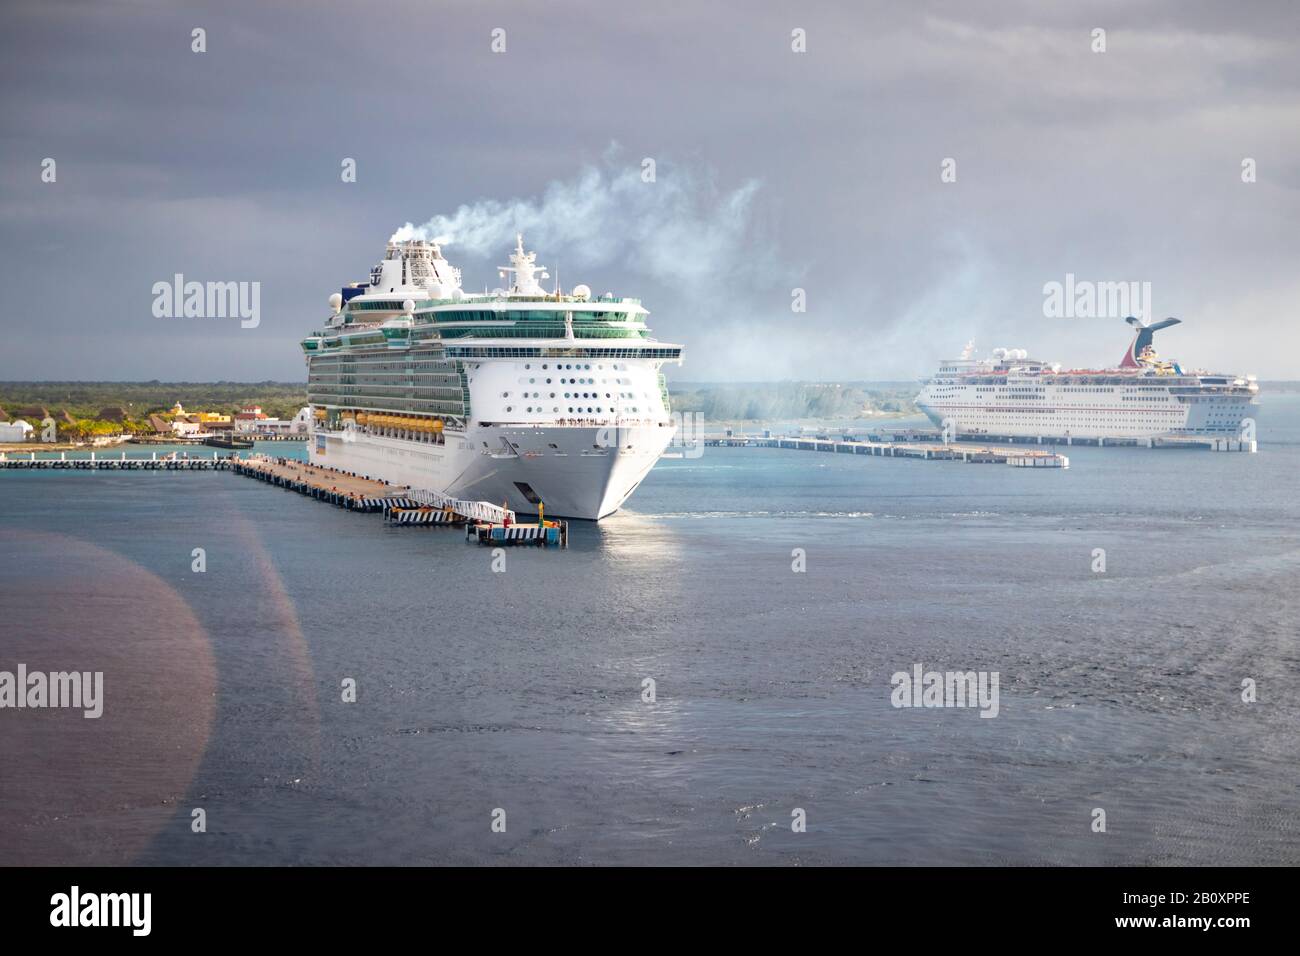 Royal Caribbean cruise ship at port, emitting smoke/steam and preparing to embark Stock Photo